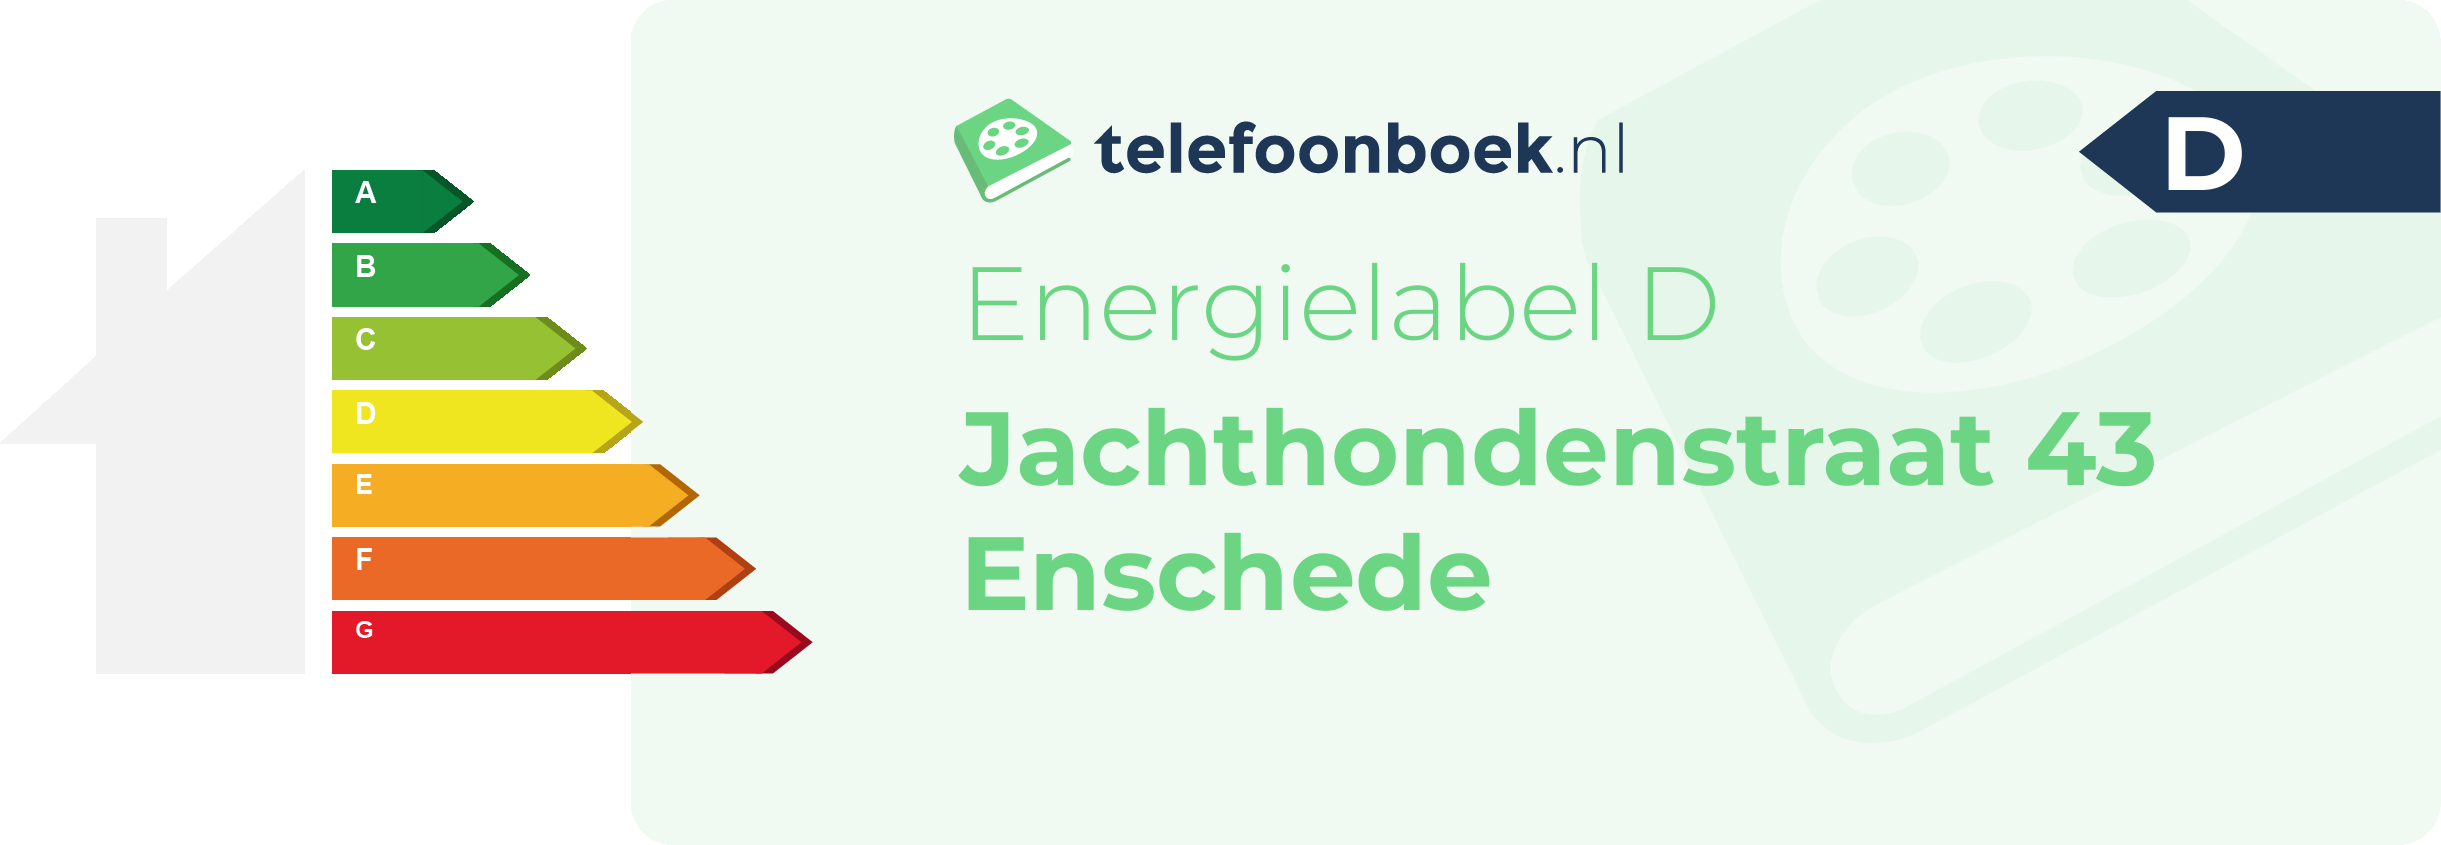 Energielabel Jachthondenstraat 43 Enschede